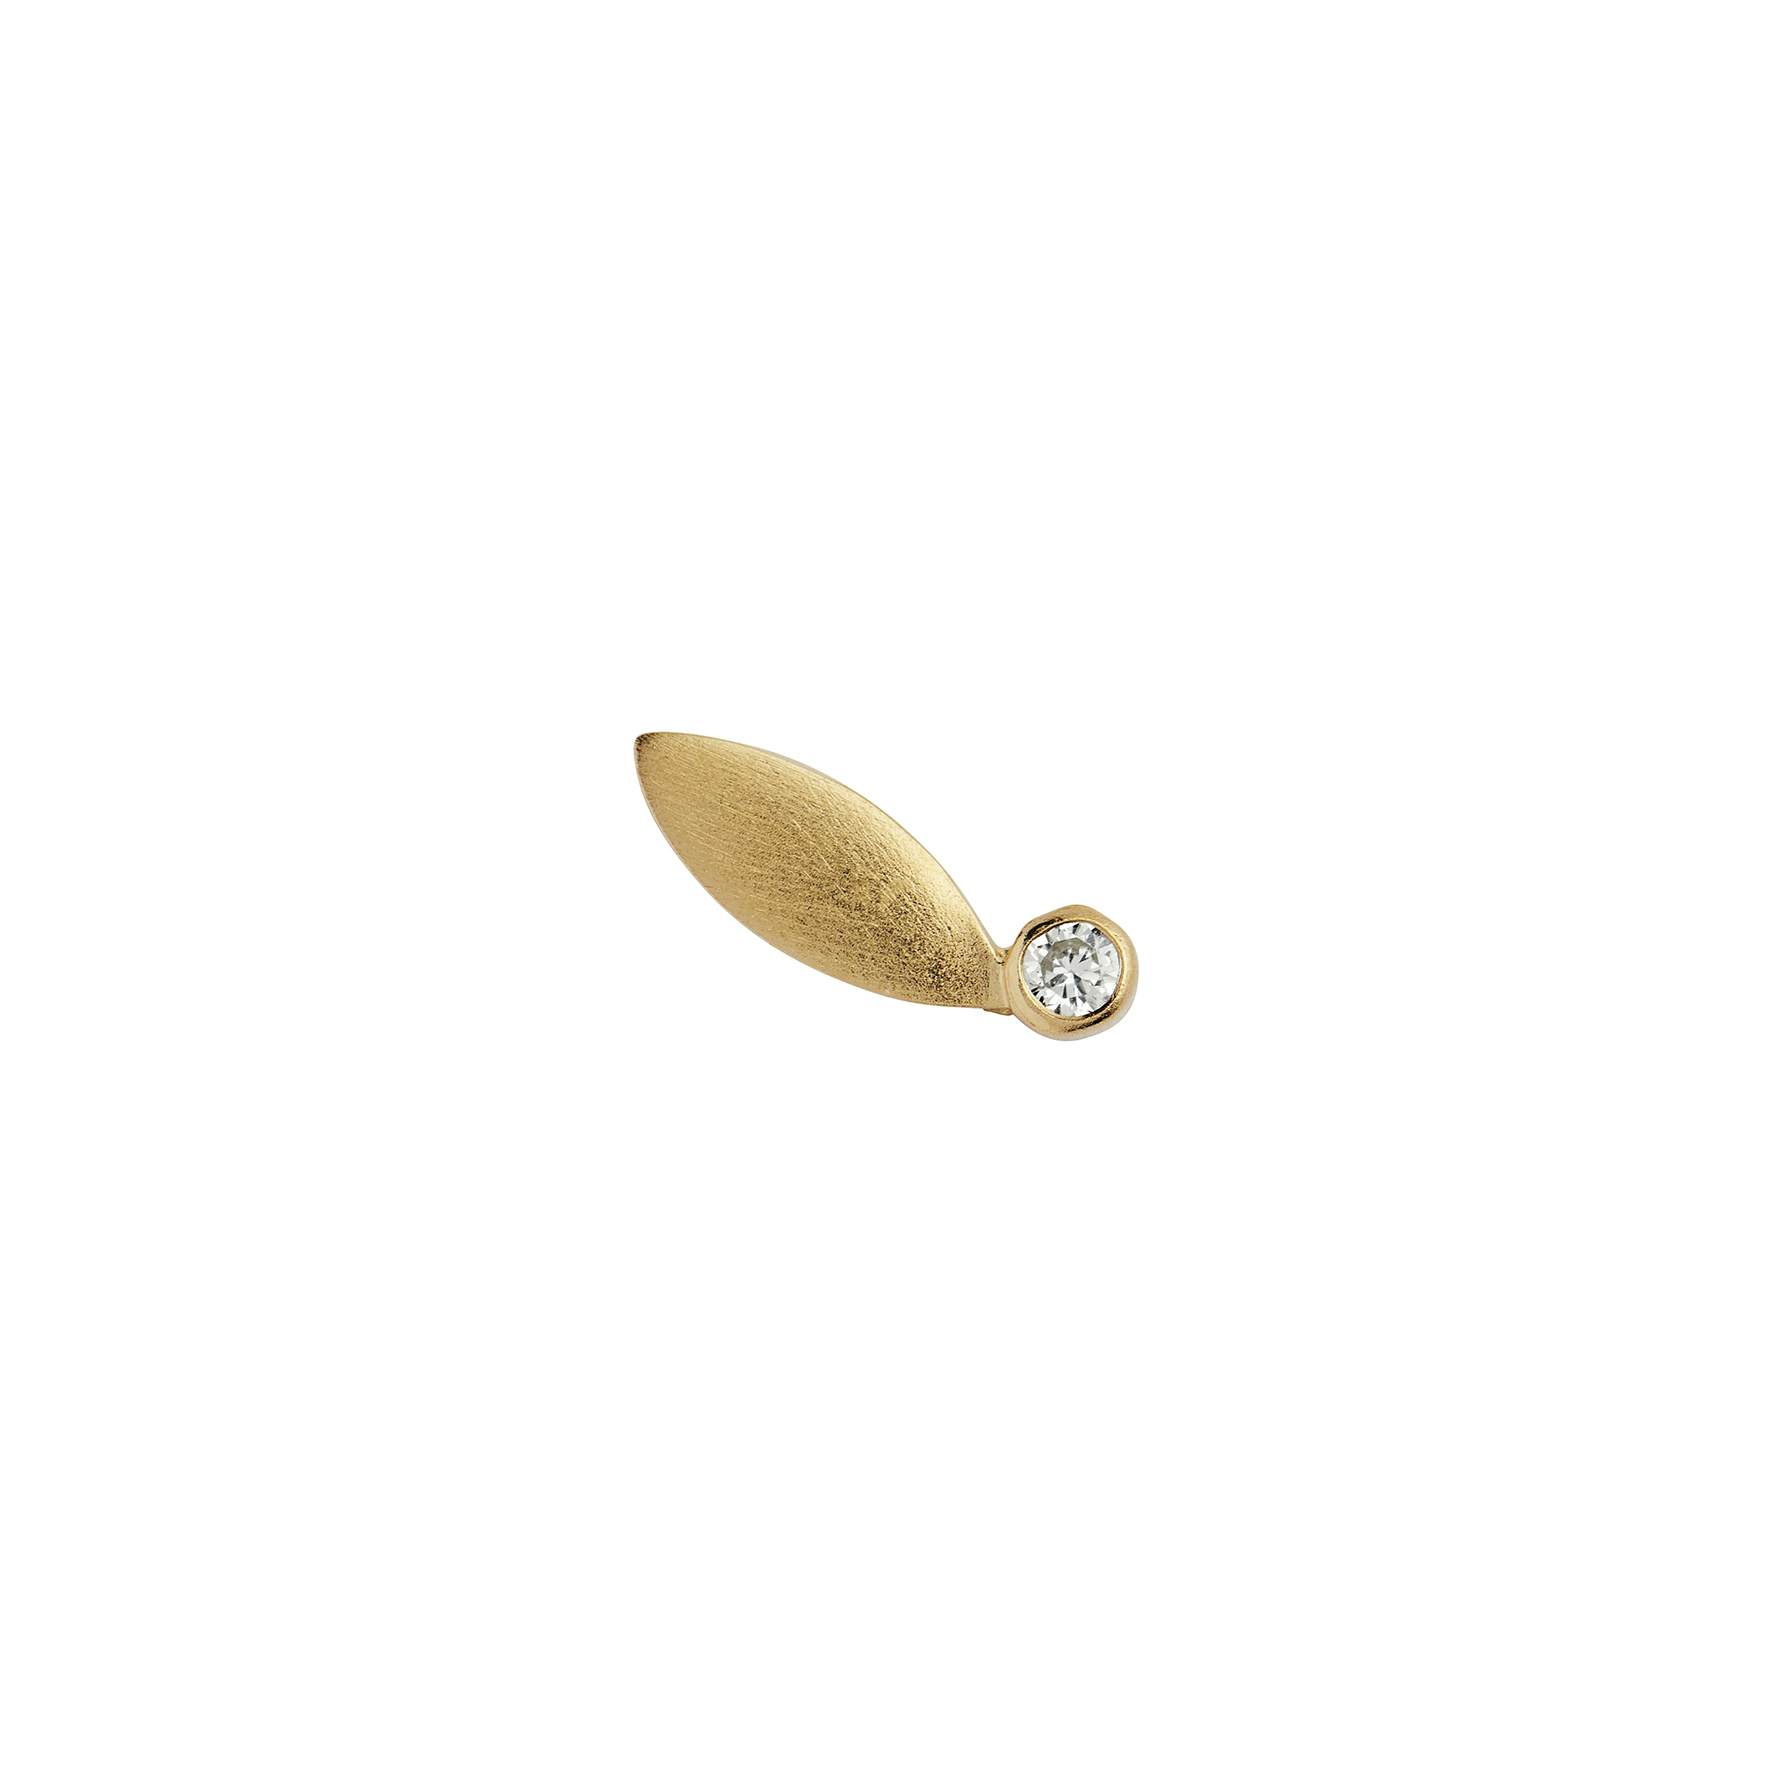 Big Dot Leaf Earstick Light Peridot fra STINE A Jewelry i Forgyldt-Sølv Sterling 925